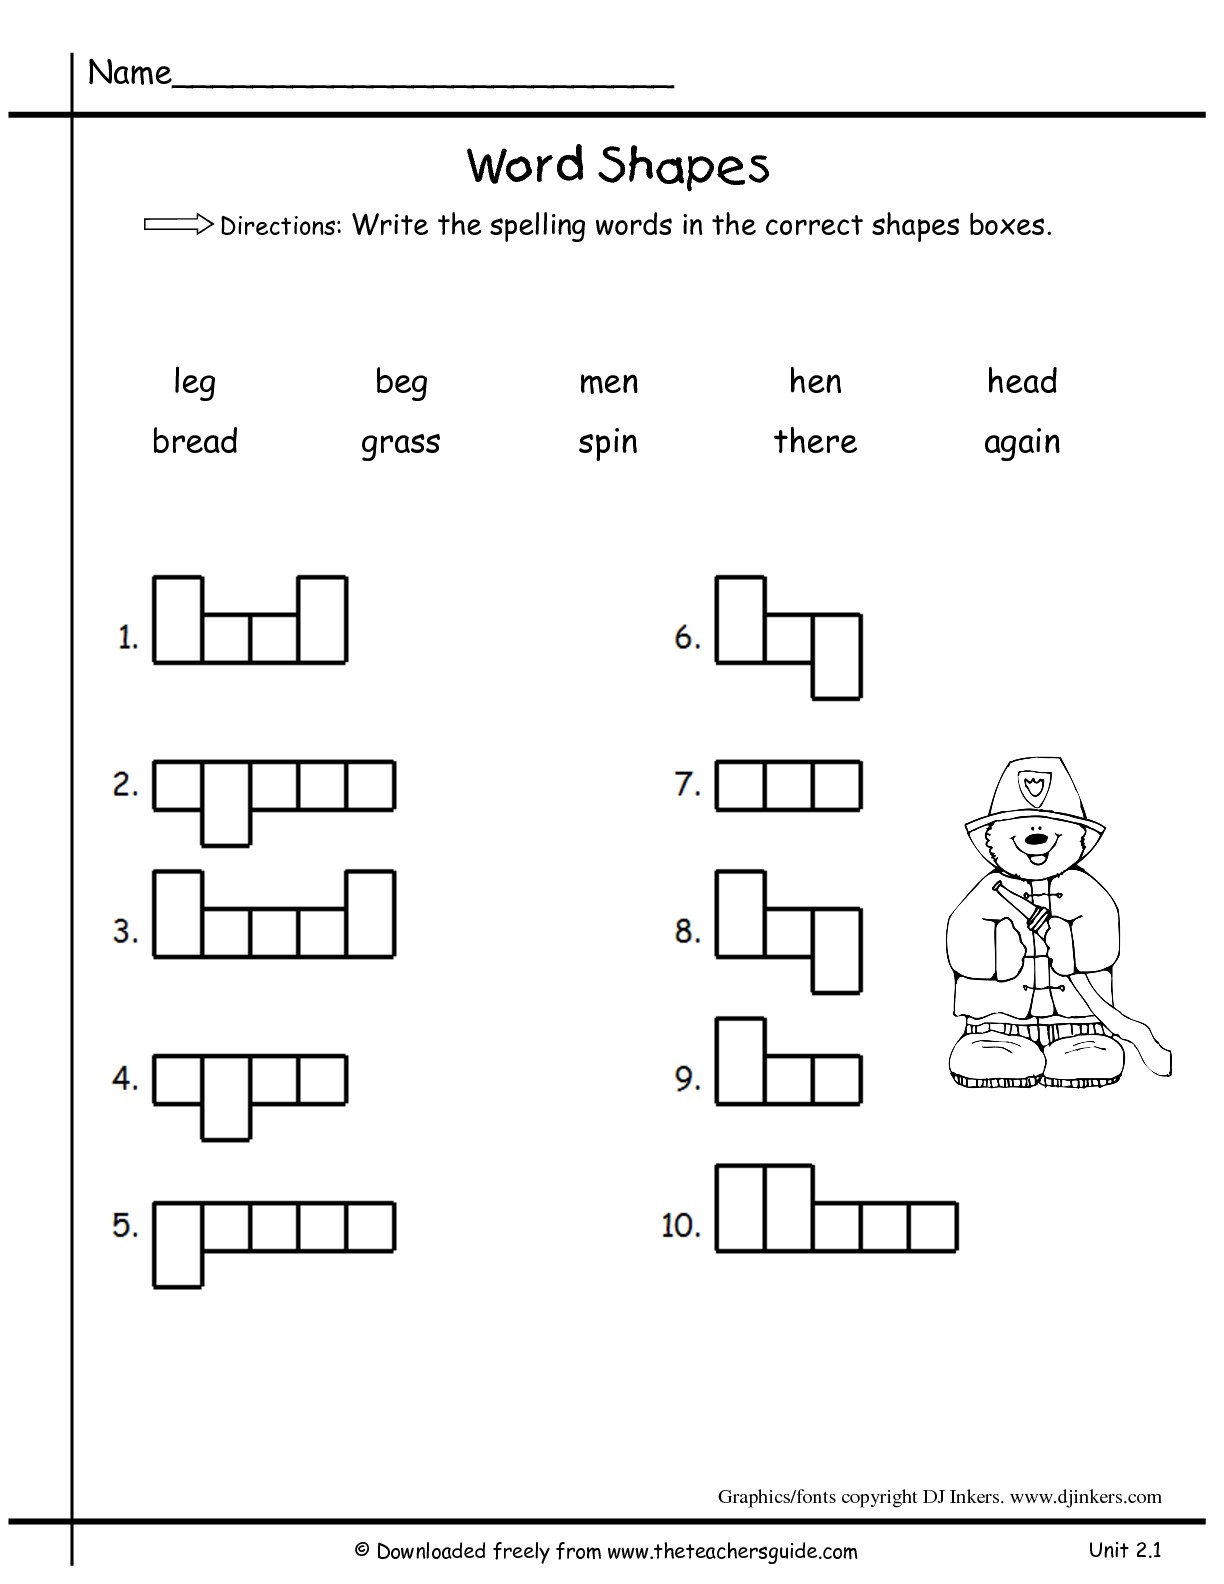 13 Best Images of College Spelling Worksheets - Kindergarten Spelling